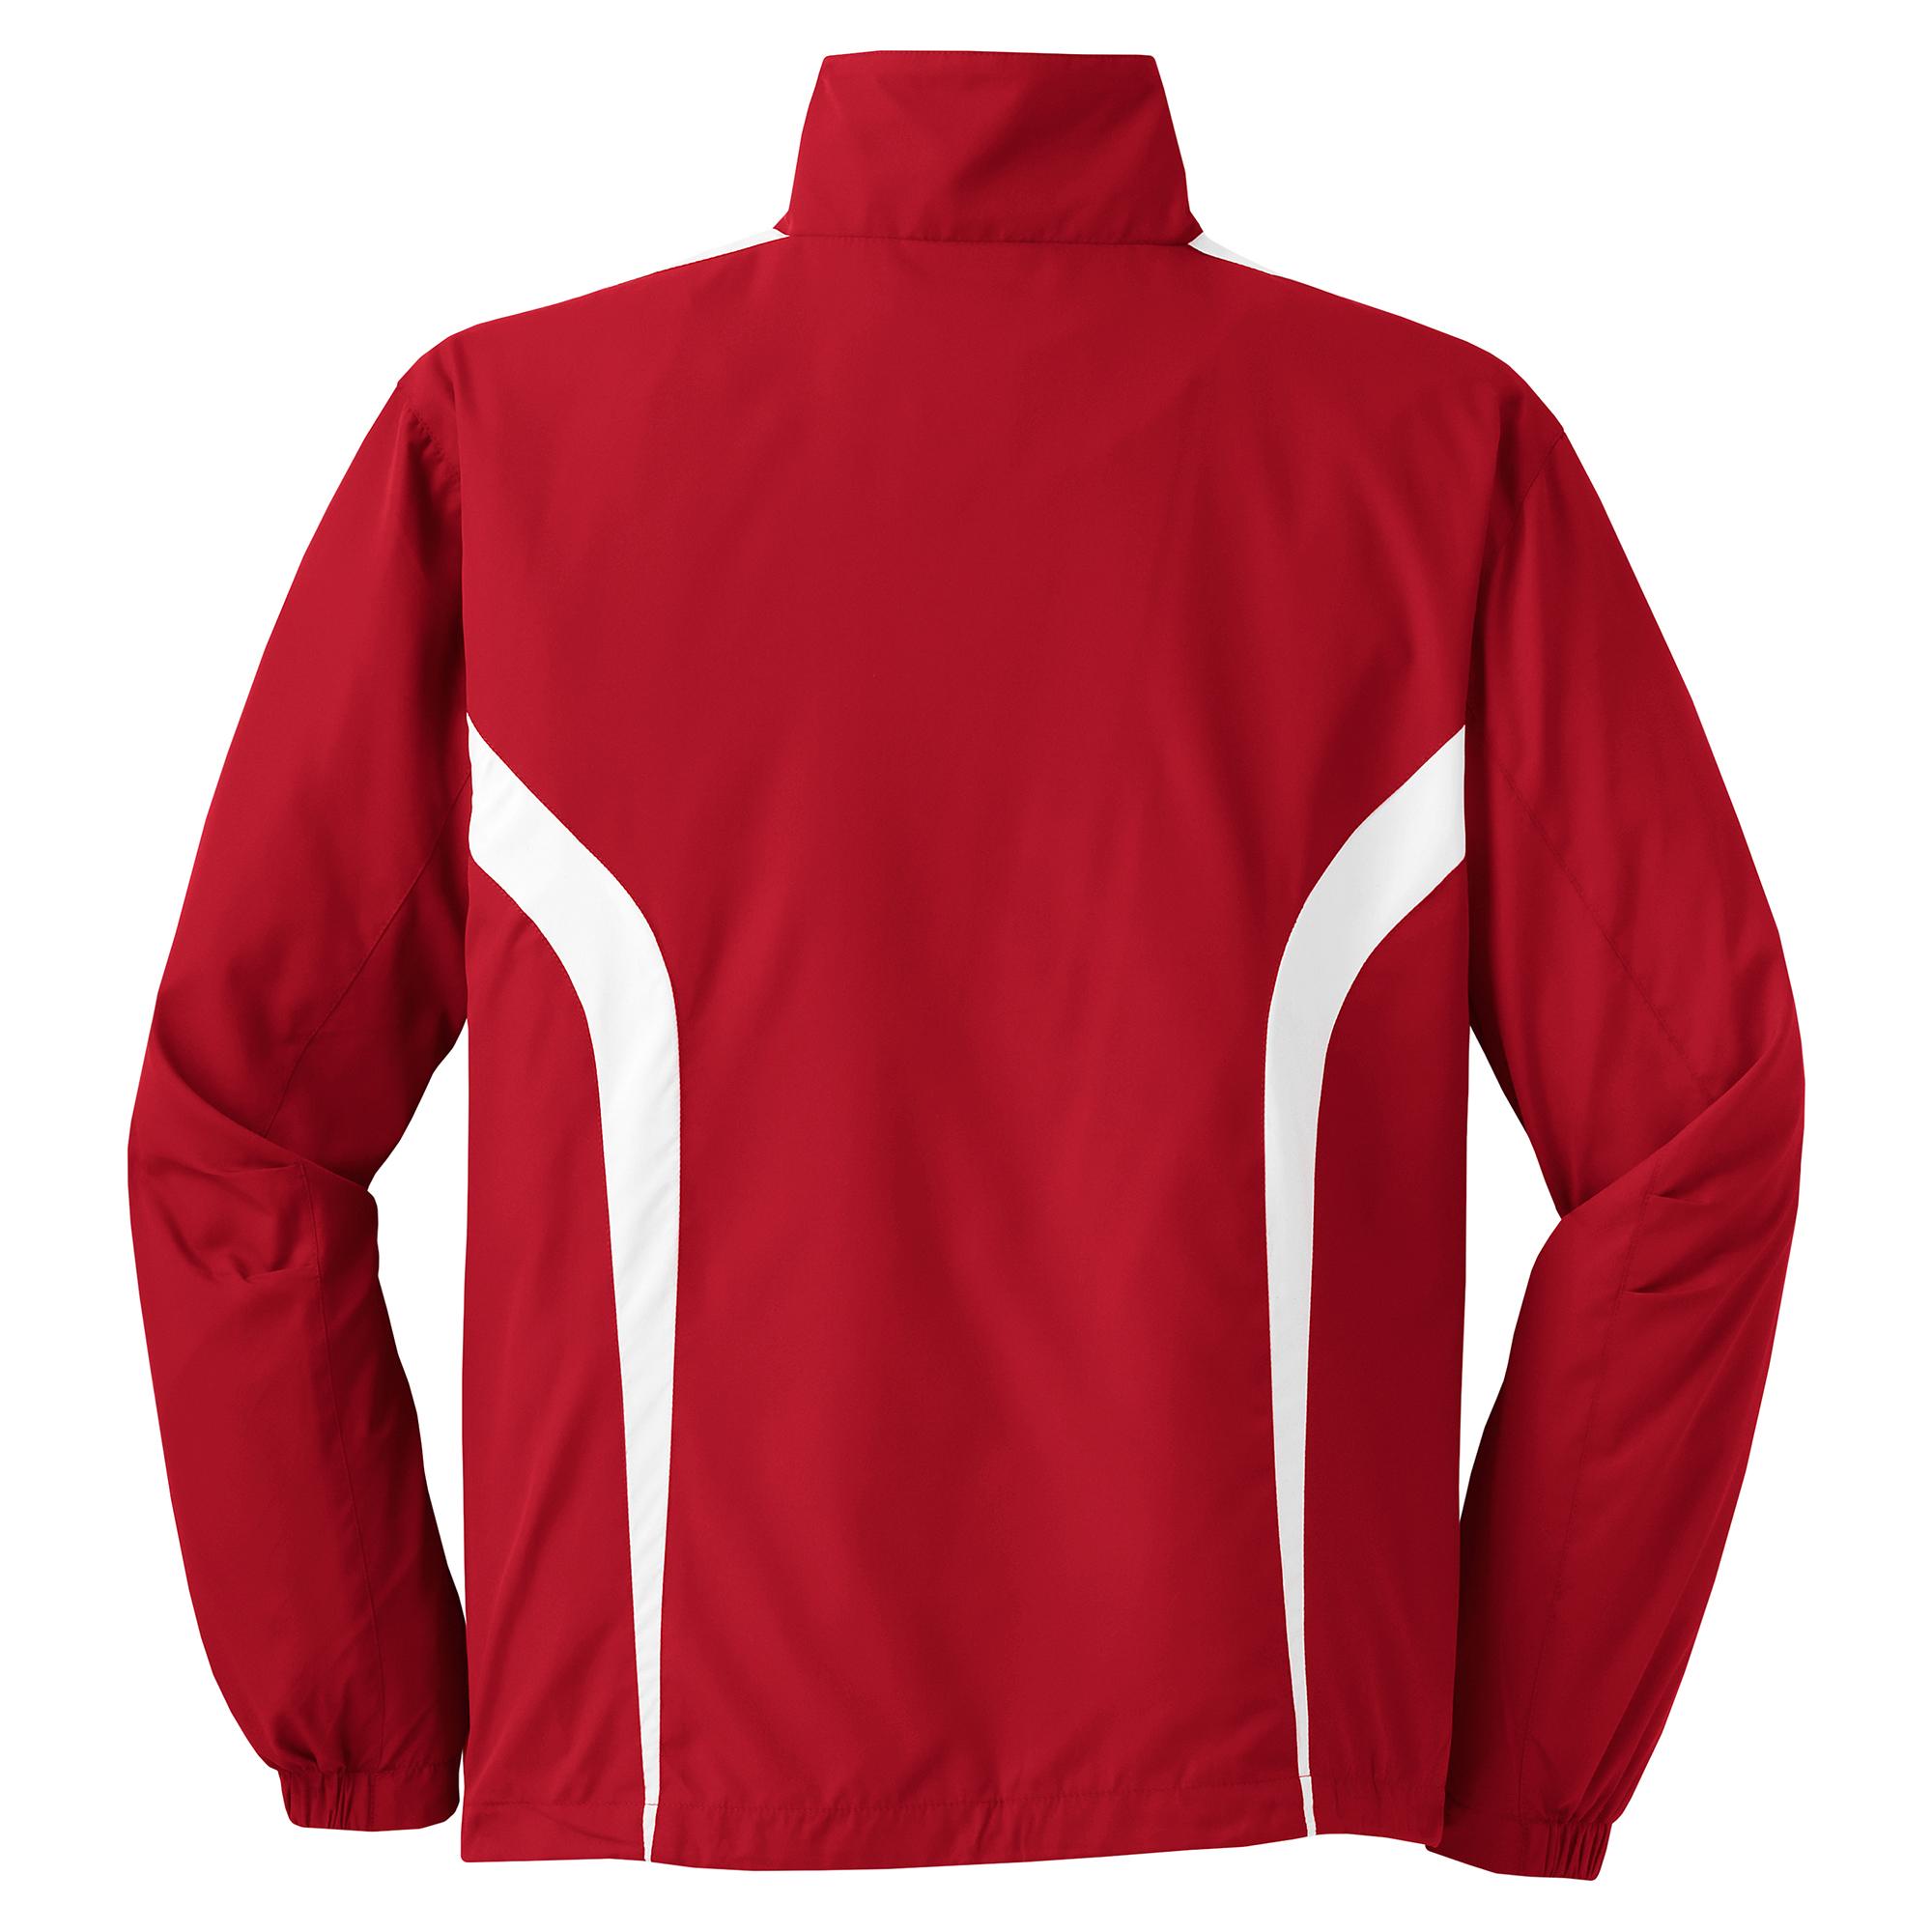 Sport-Tek JST60 Colorblock Raglan Jacket - True Red/White